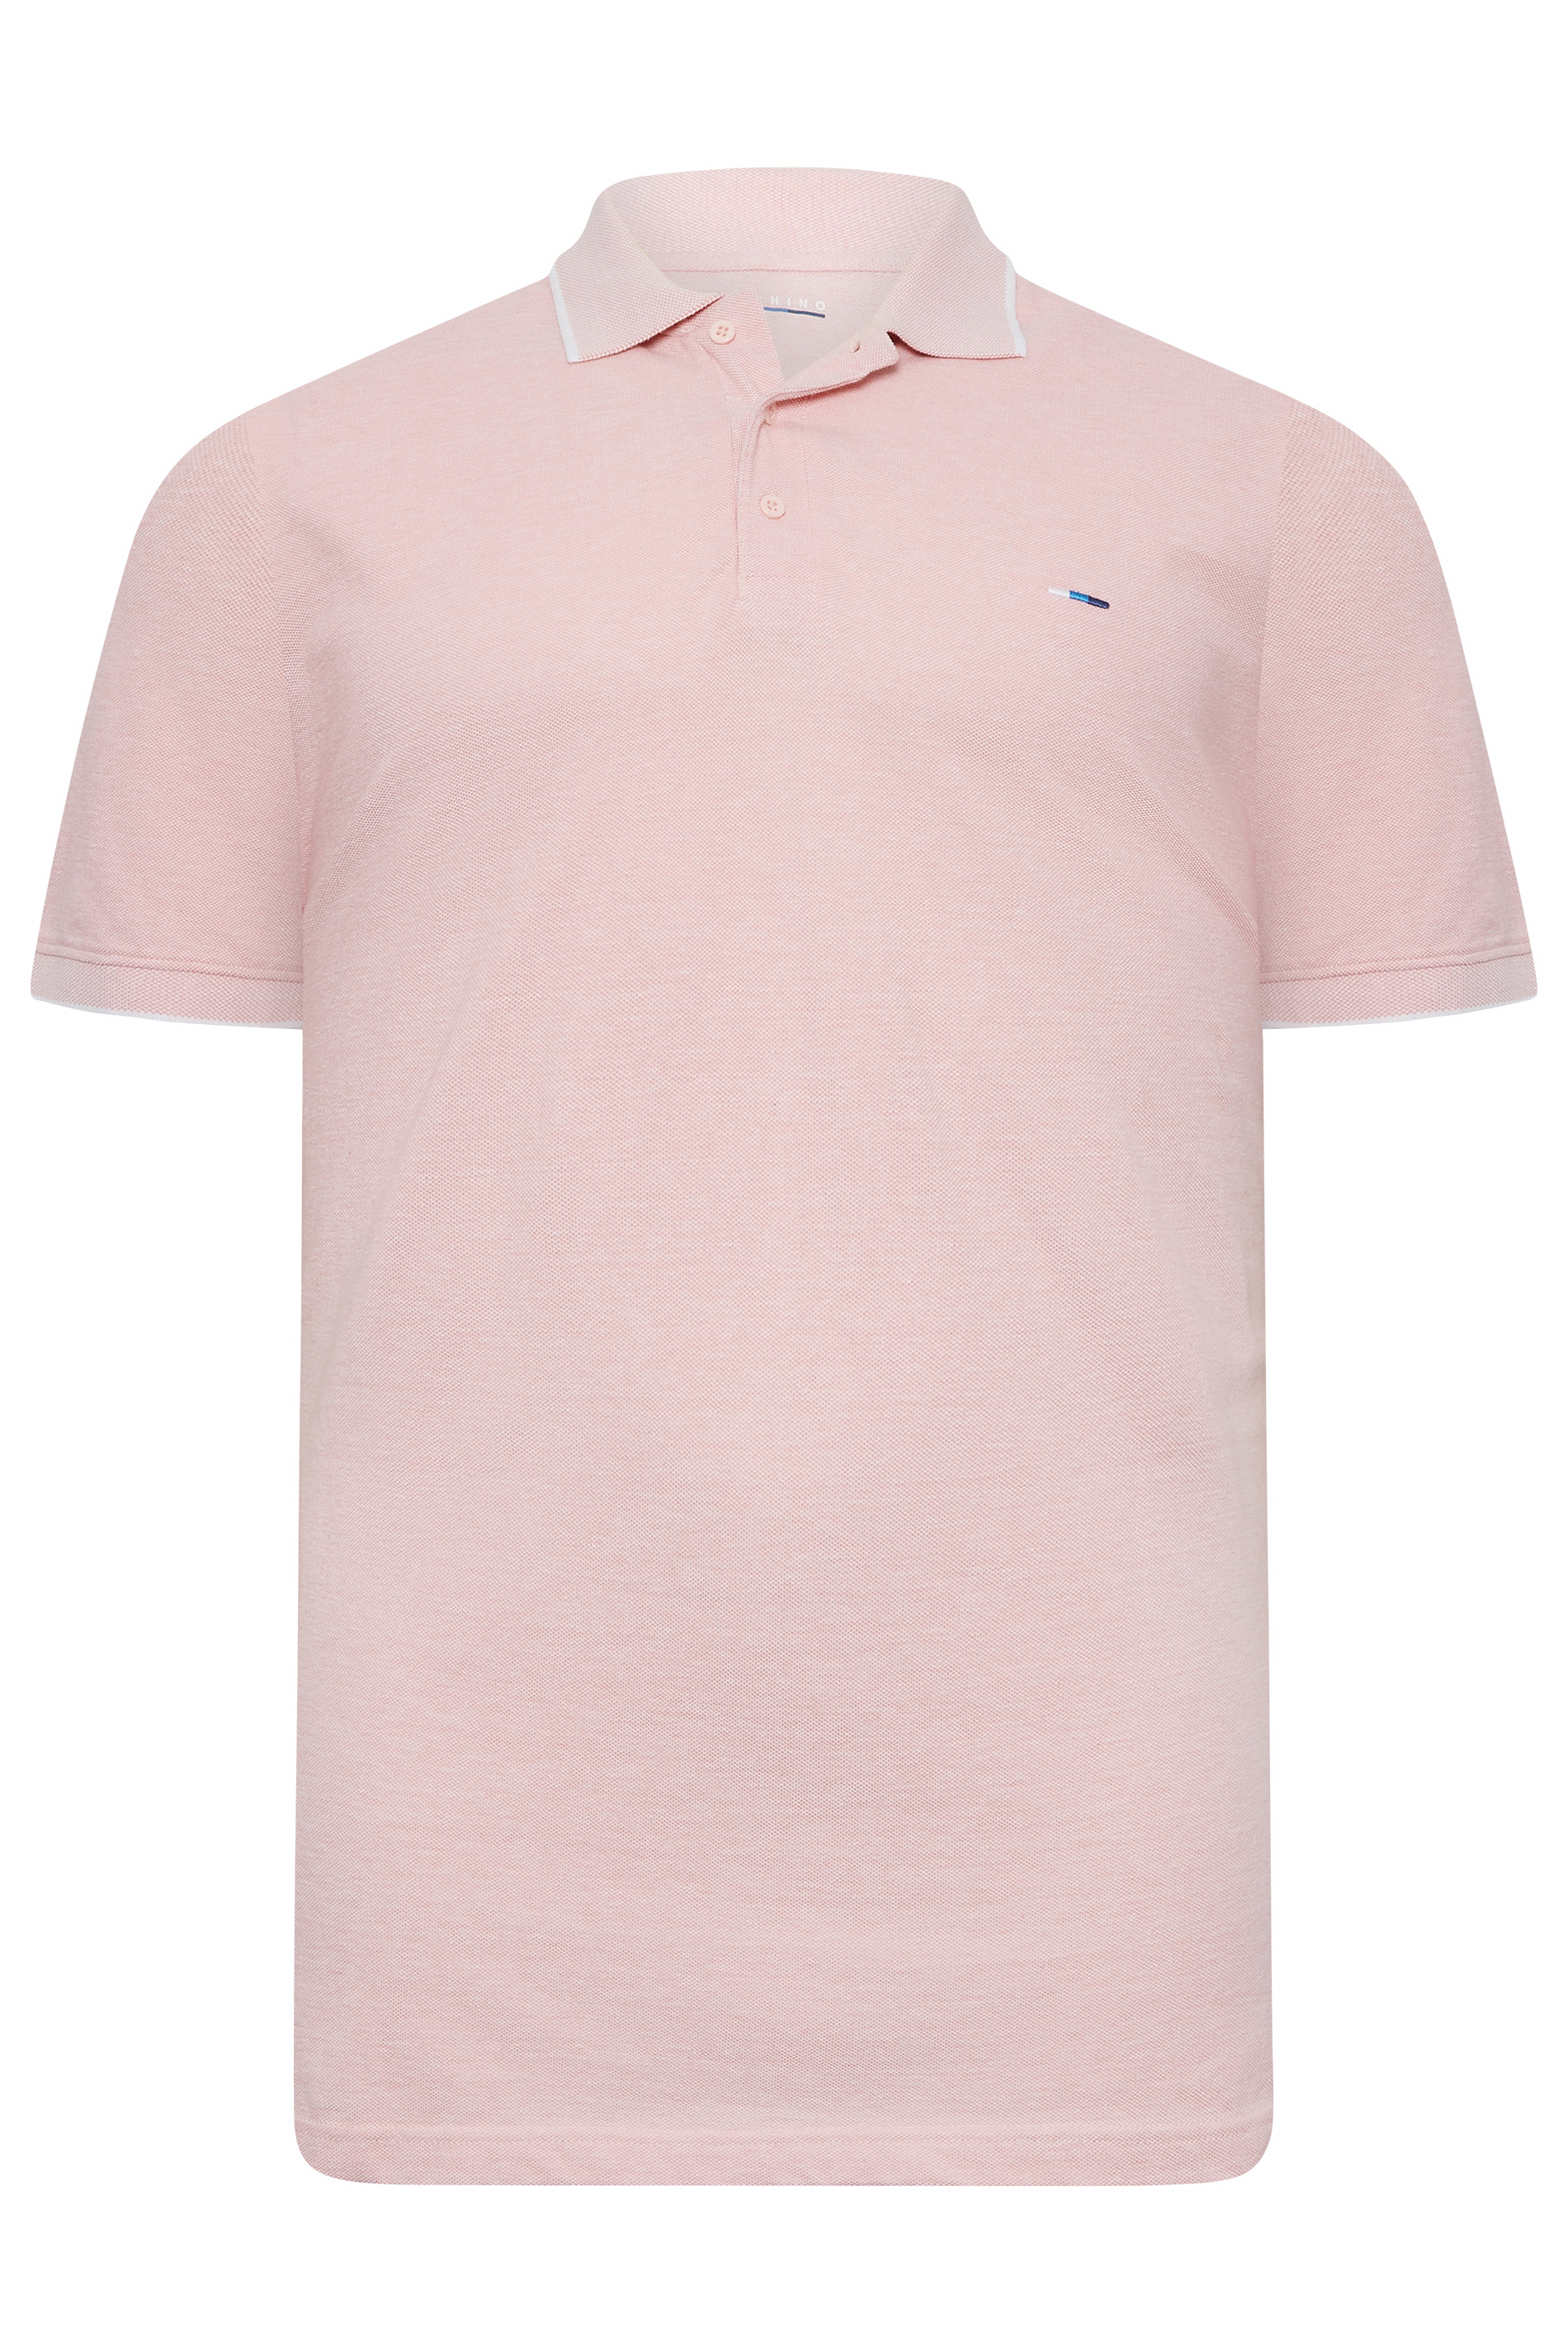 BadRhino Big & Tall Light Pink Birdseye Polo Shirt | BadRhino 3